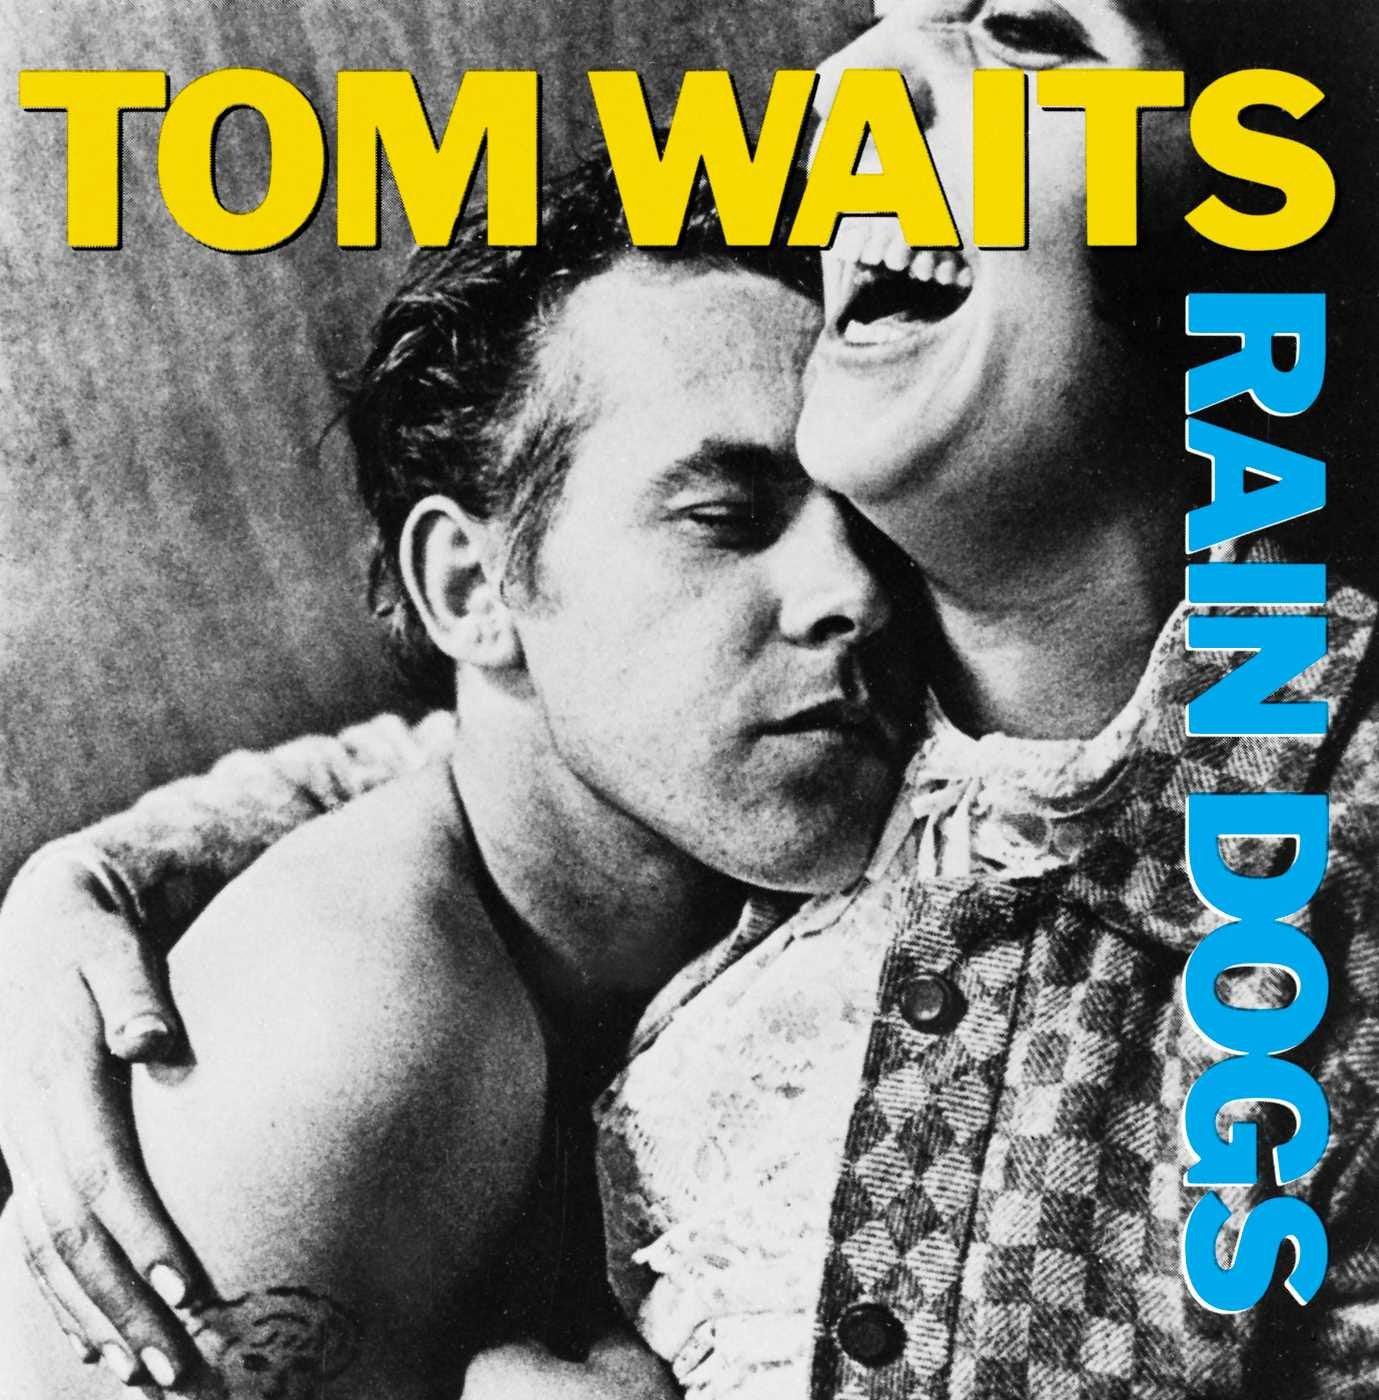 Tom Waits "Rain Dogs" LP